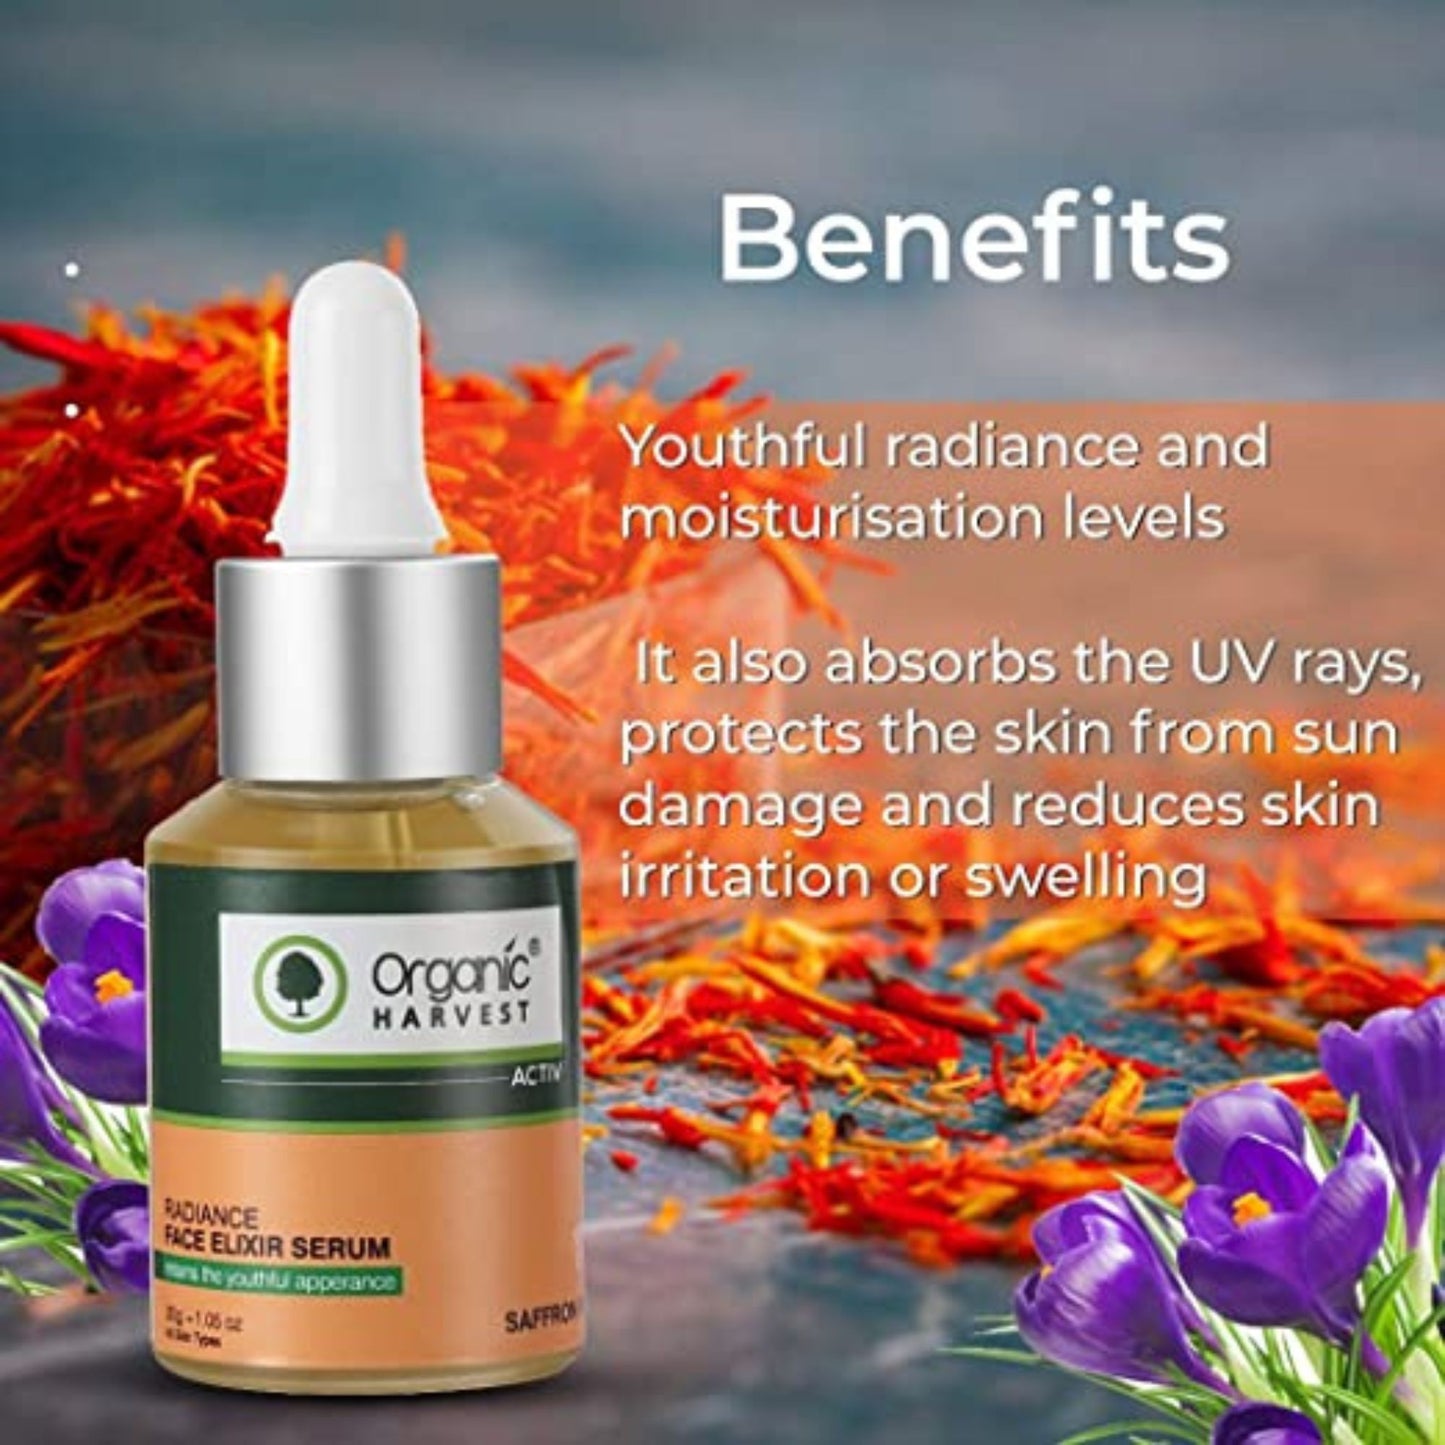 Organic Harvest Radiance Face Elixir Serum, Helps In Anti-Ageing, Reduces Pigmentation & Dark Spots, For Women & Girls, 100% Organic, Paraben & Sulphate Free - 30ml